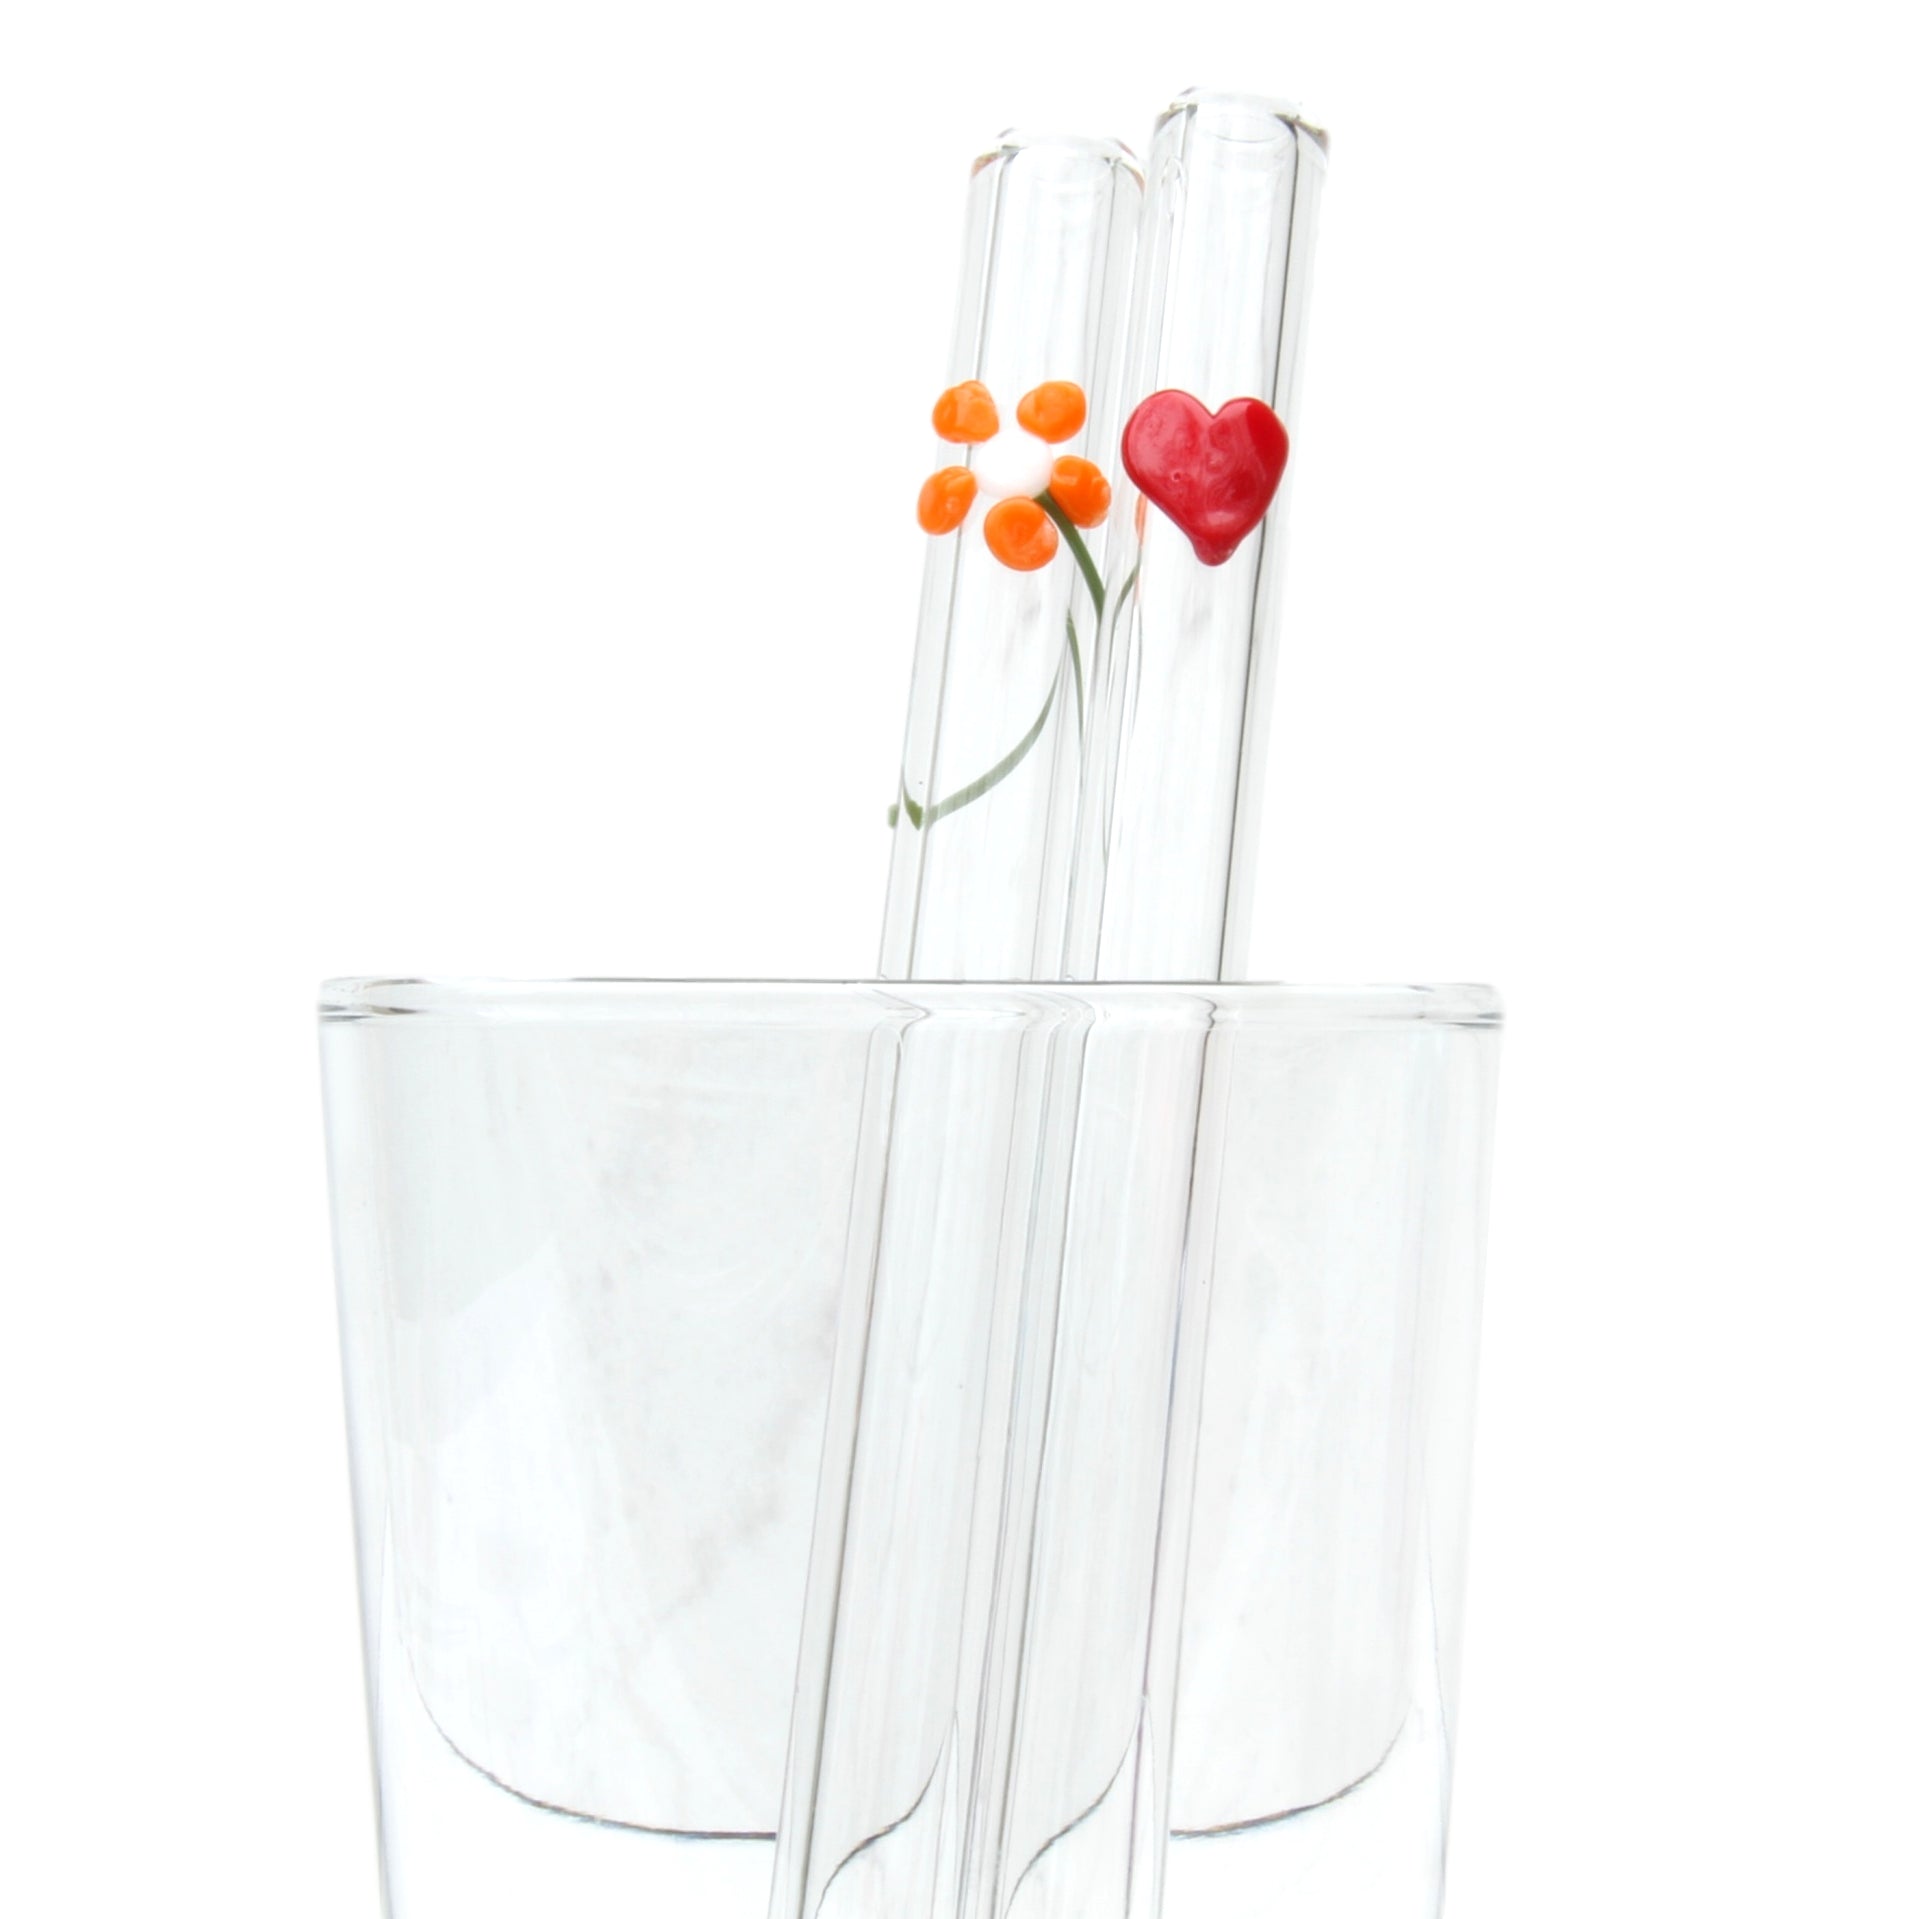 Choosing Your Glass Straw - GlassSipper